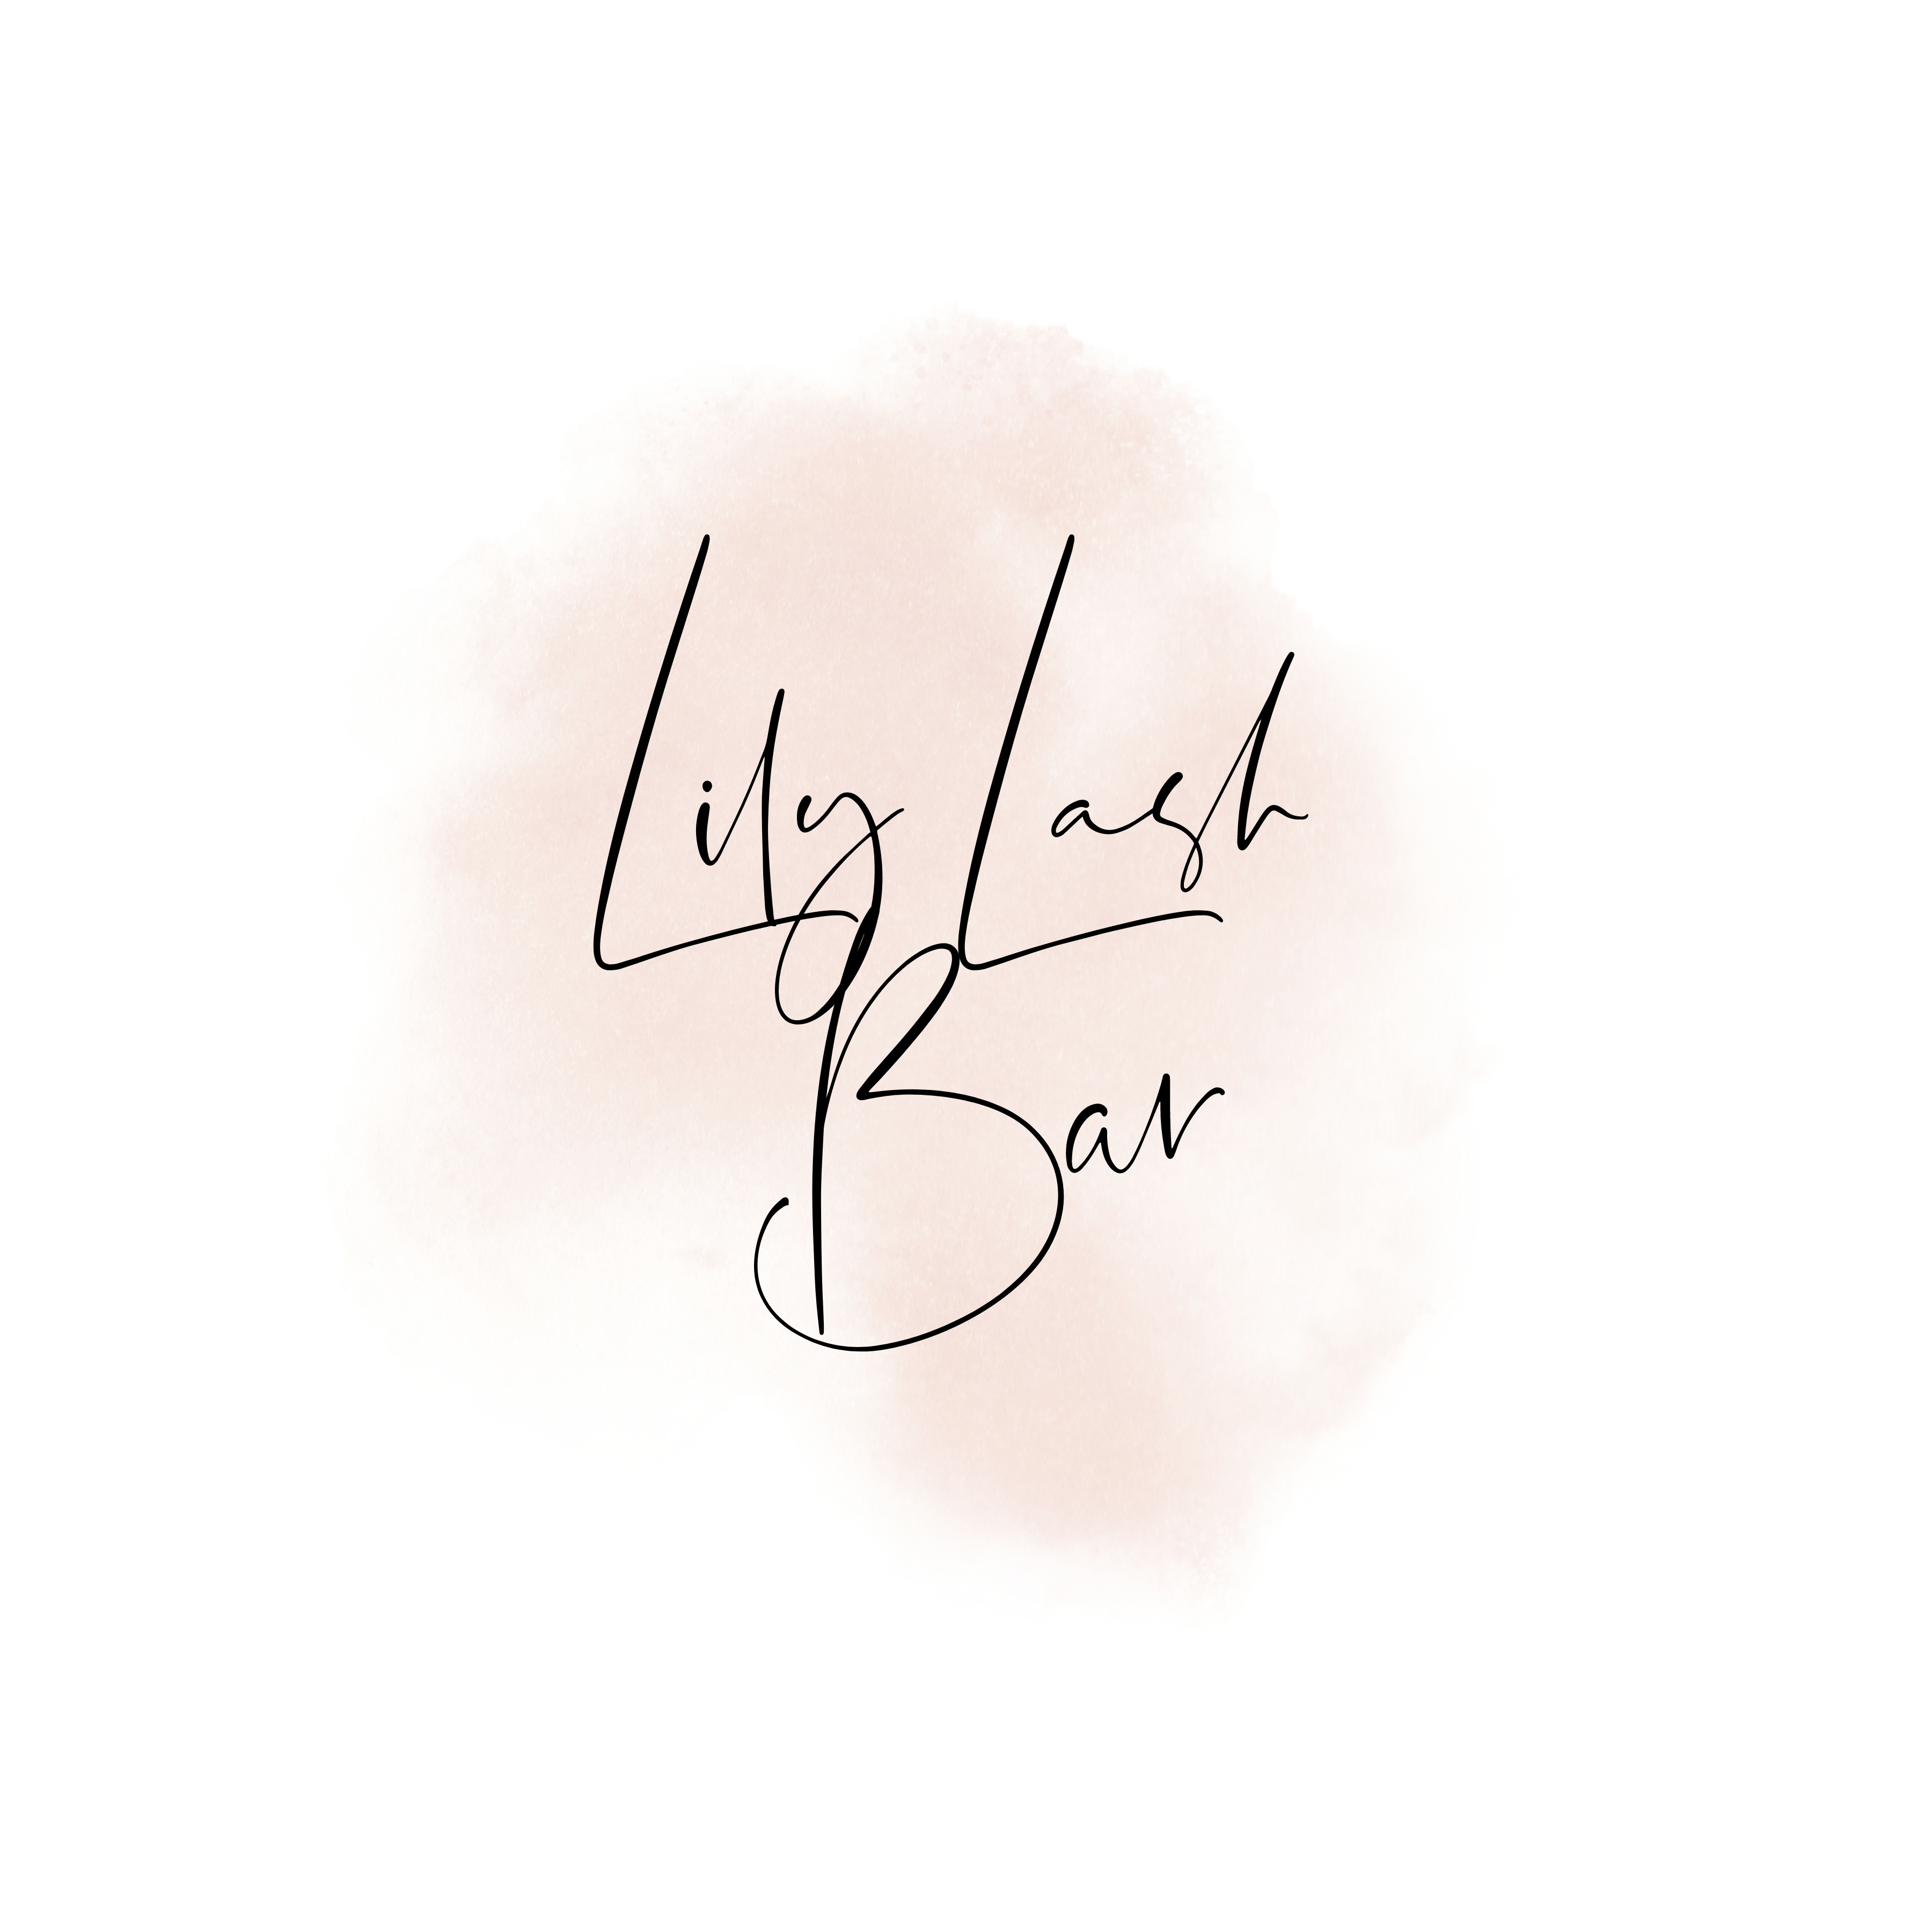 Lily Lash Bar